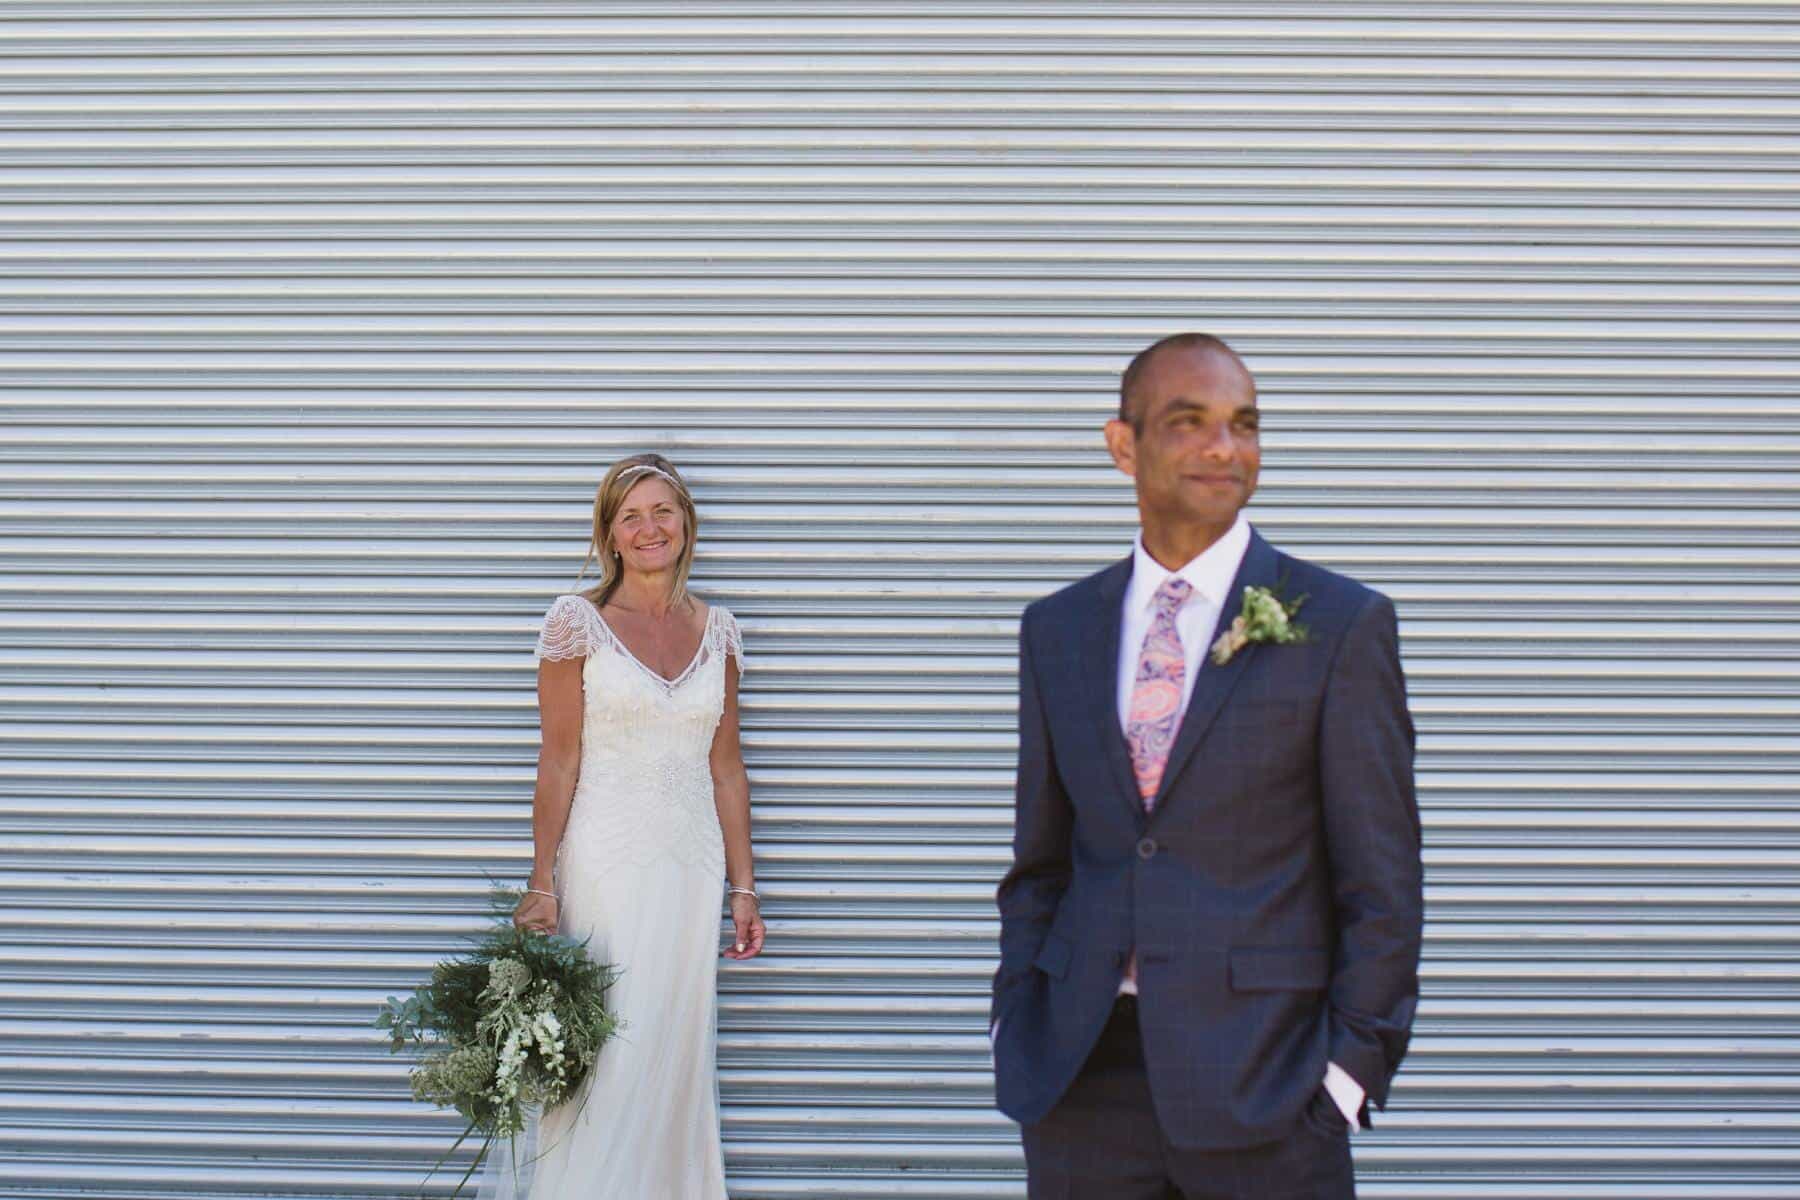 Bruisyard Hall and Barn wedding photography couple portraits